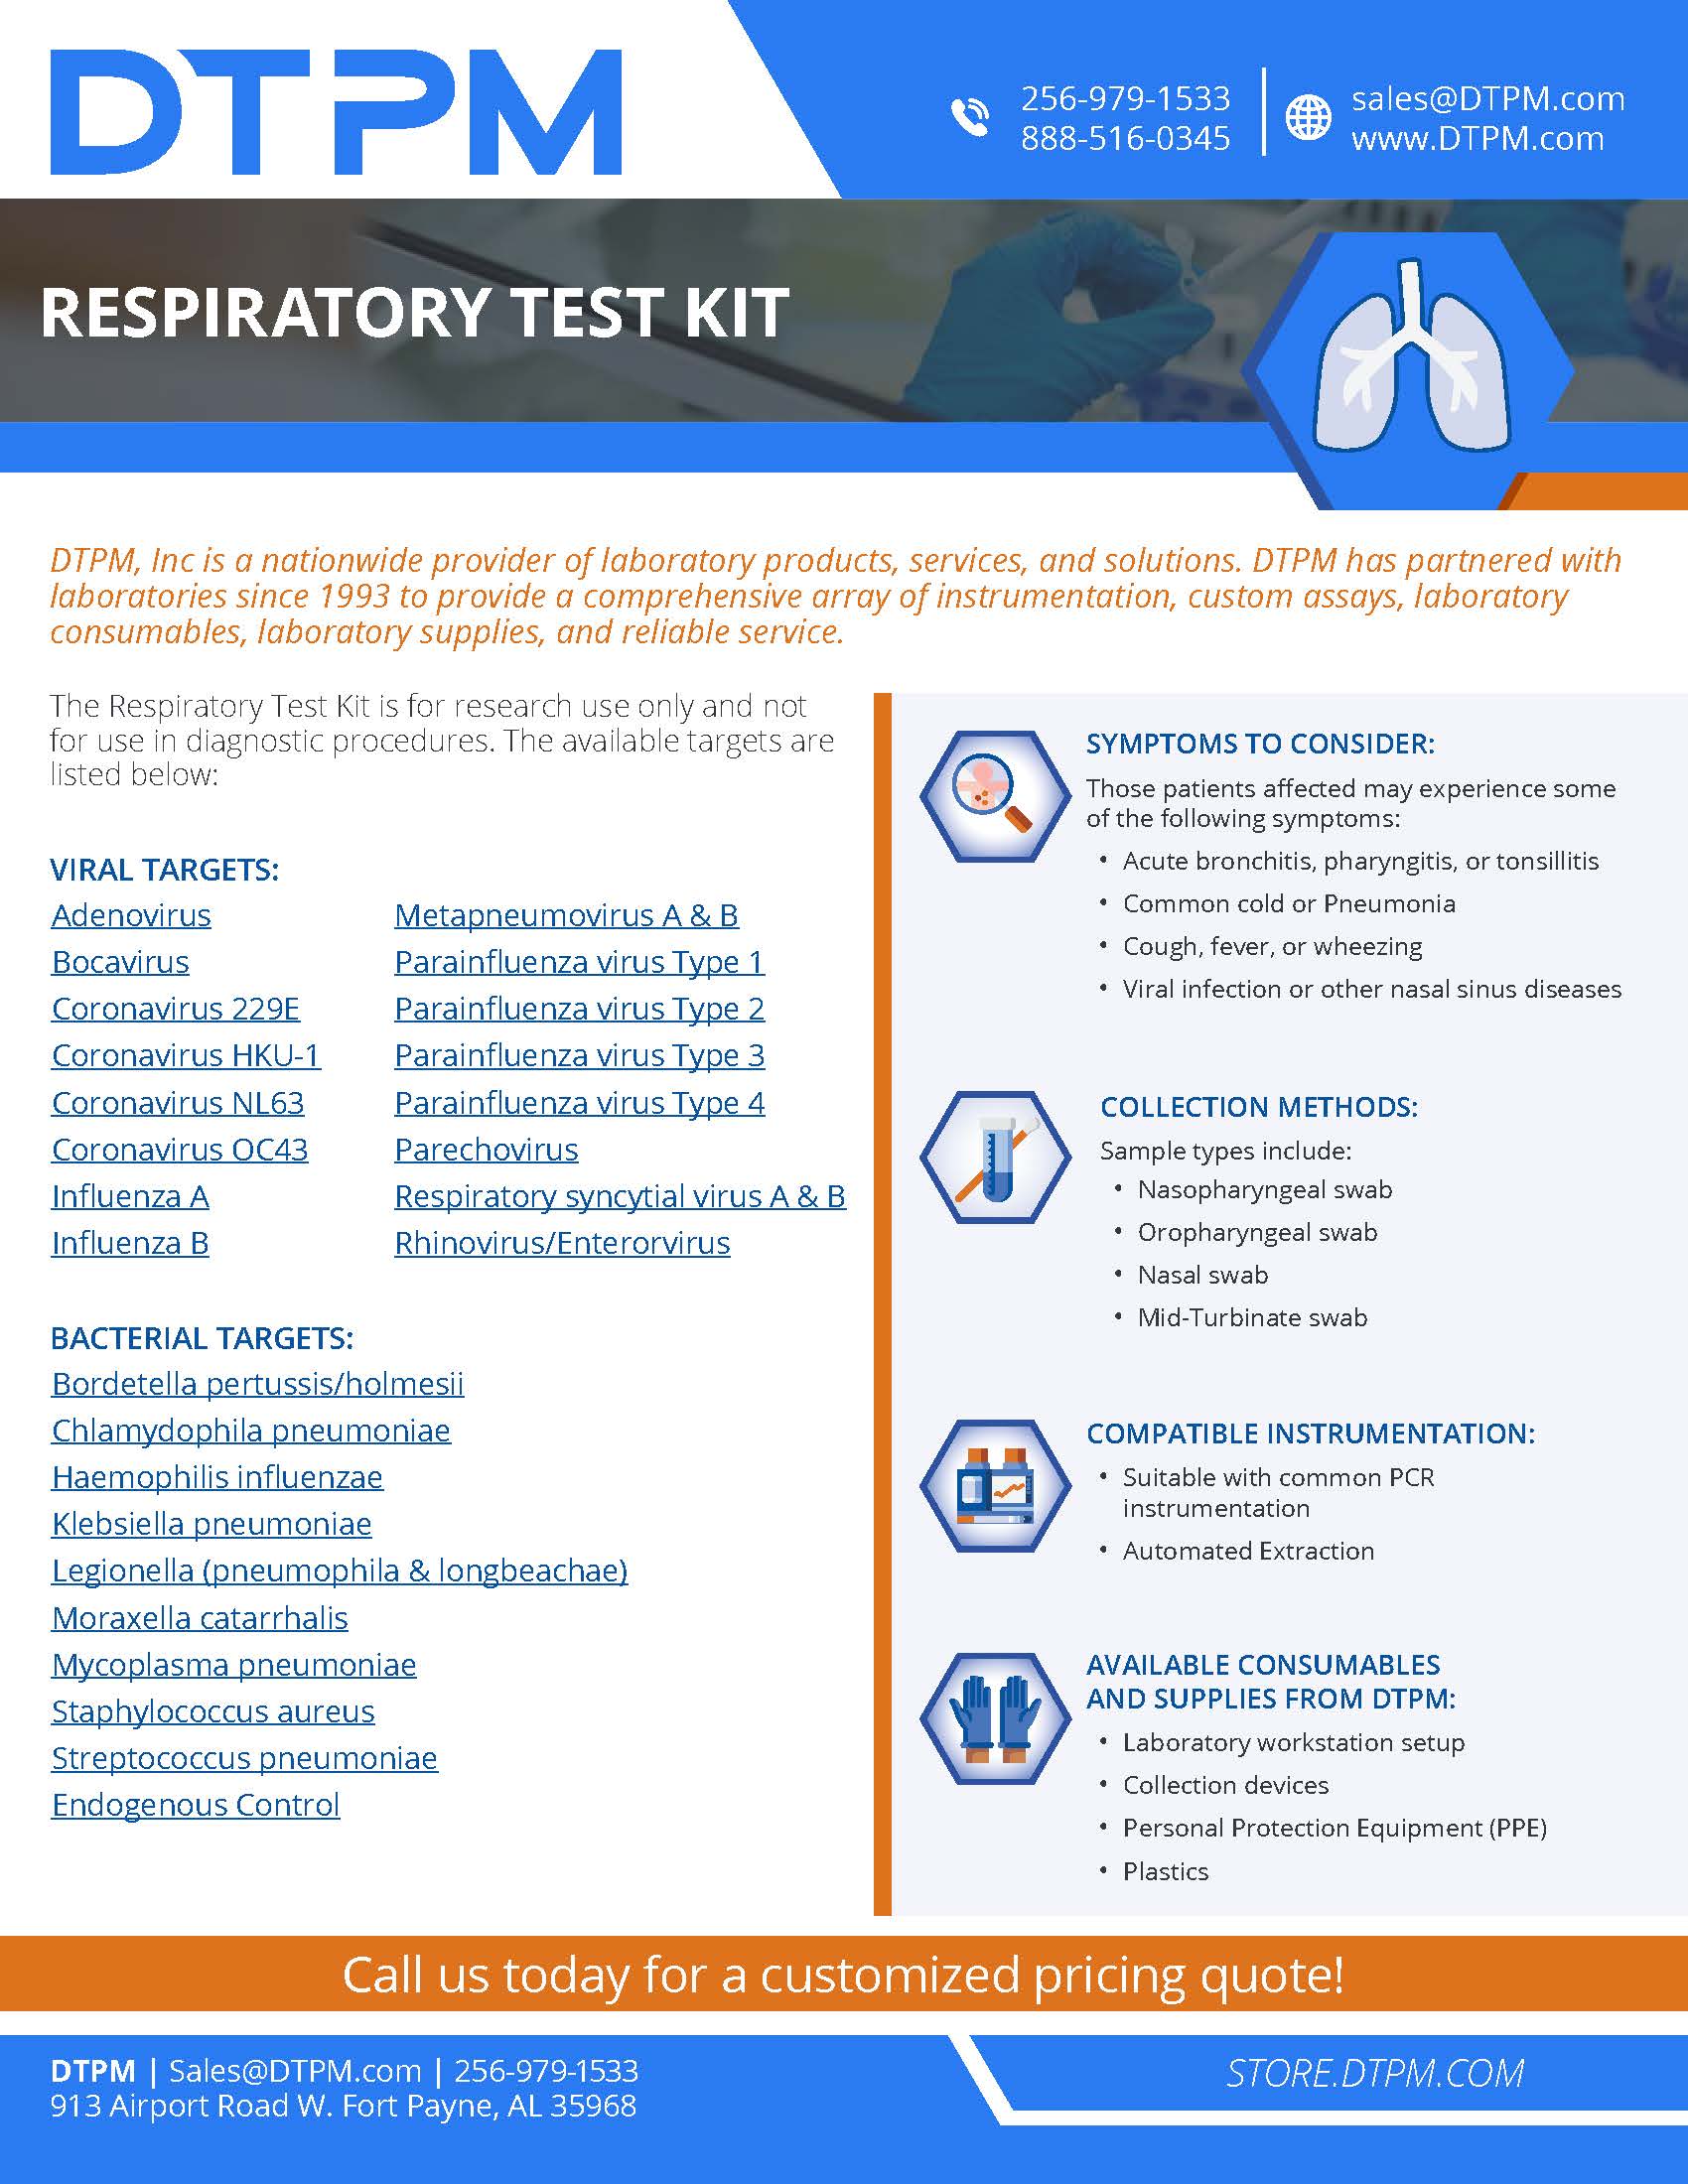 DTPM Respiratory Test Kit